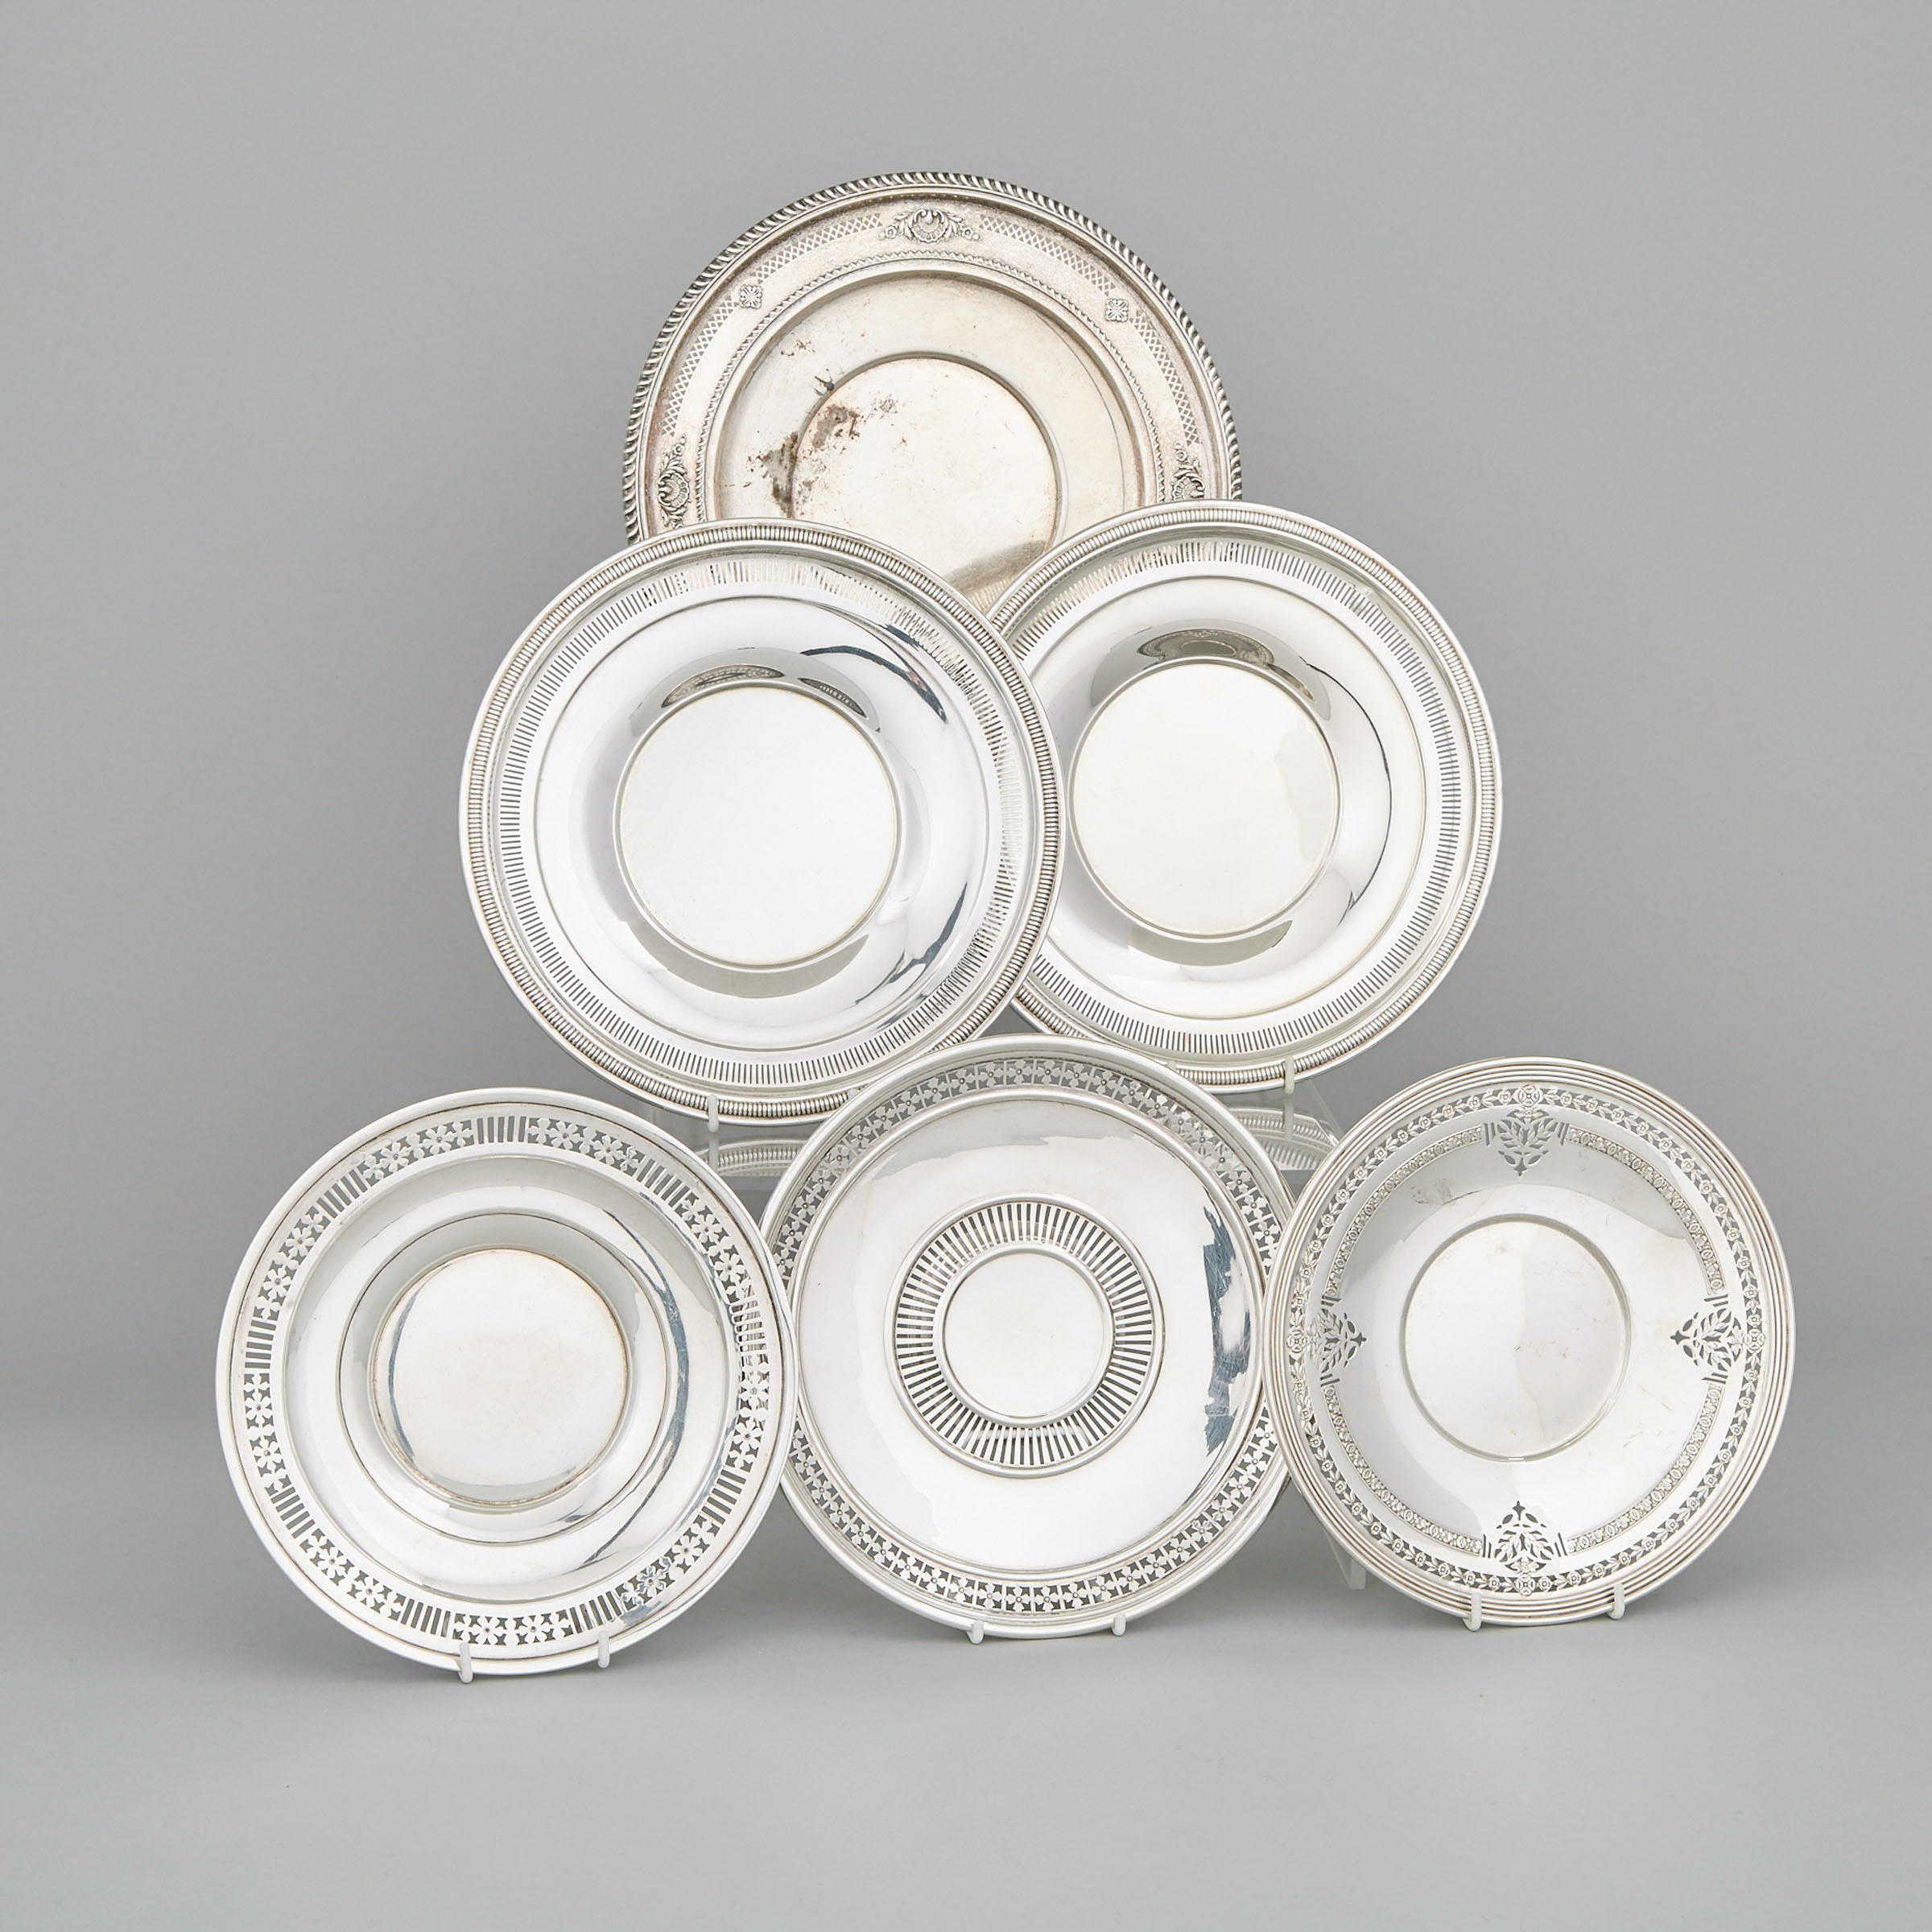 Six North American Silver Pierced Cake Plates, 20th century